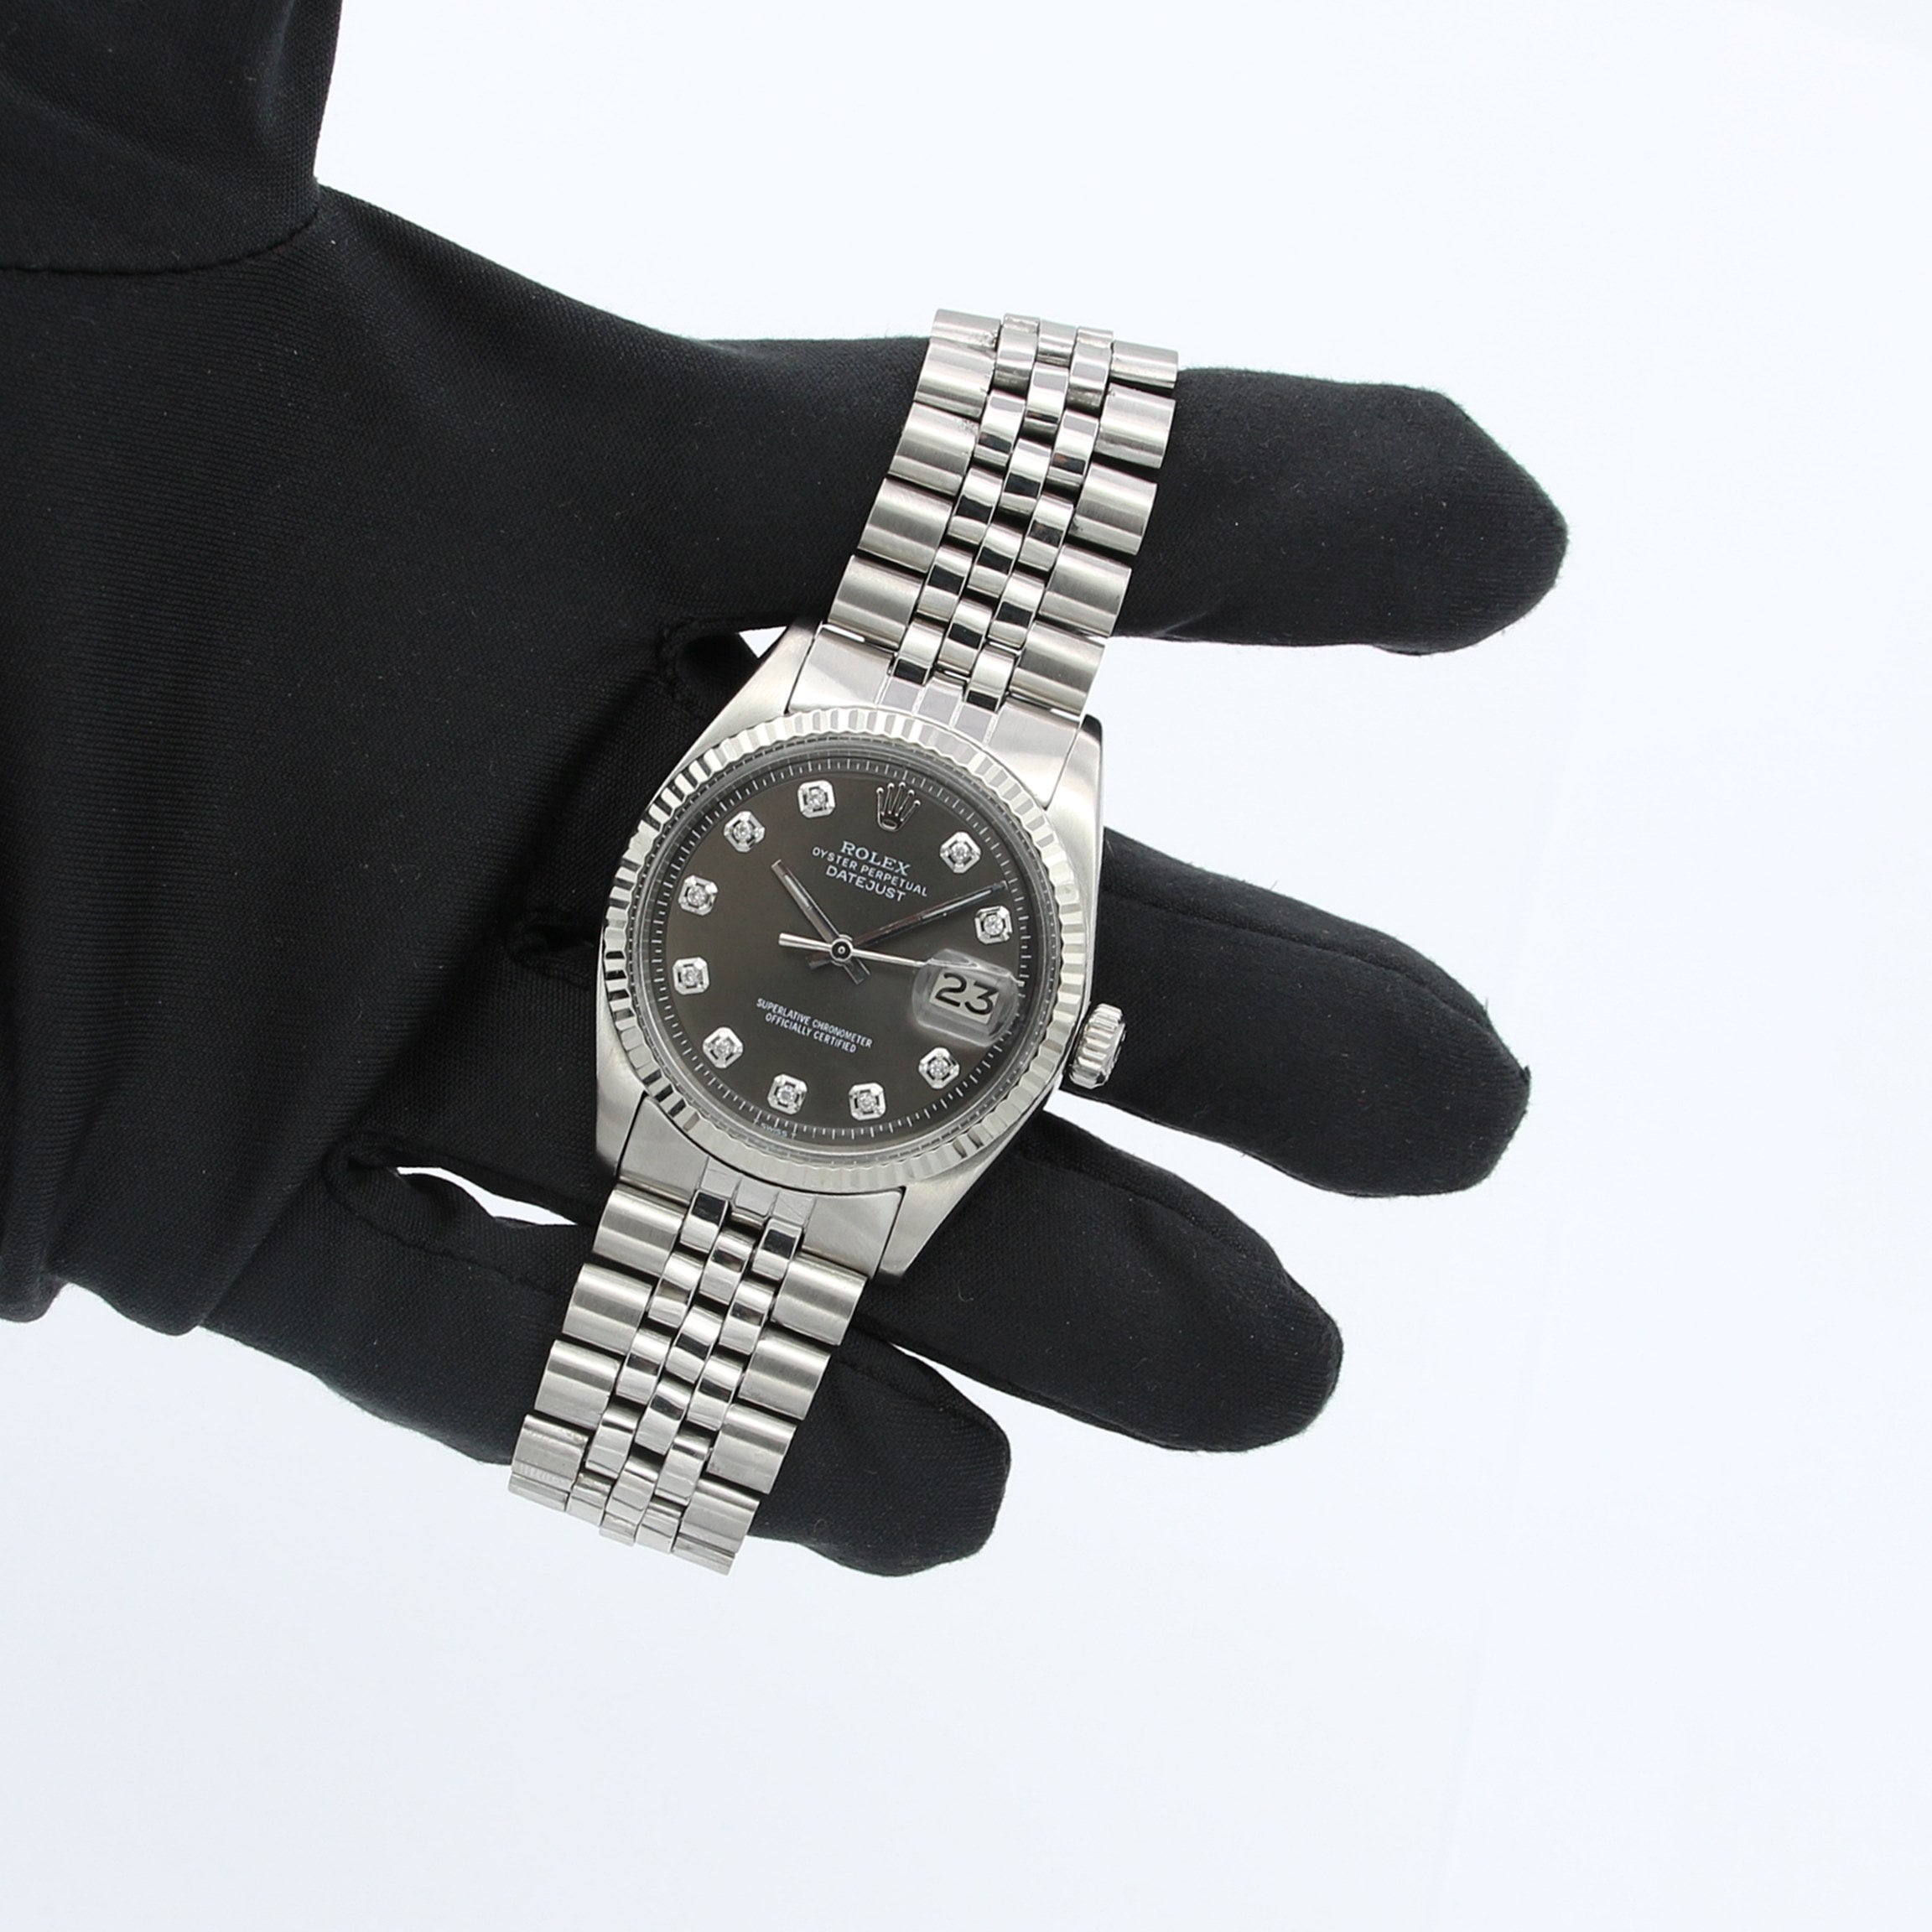 Rolex Datejust 36 Black Dial Watch